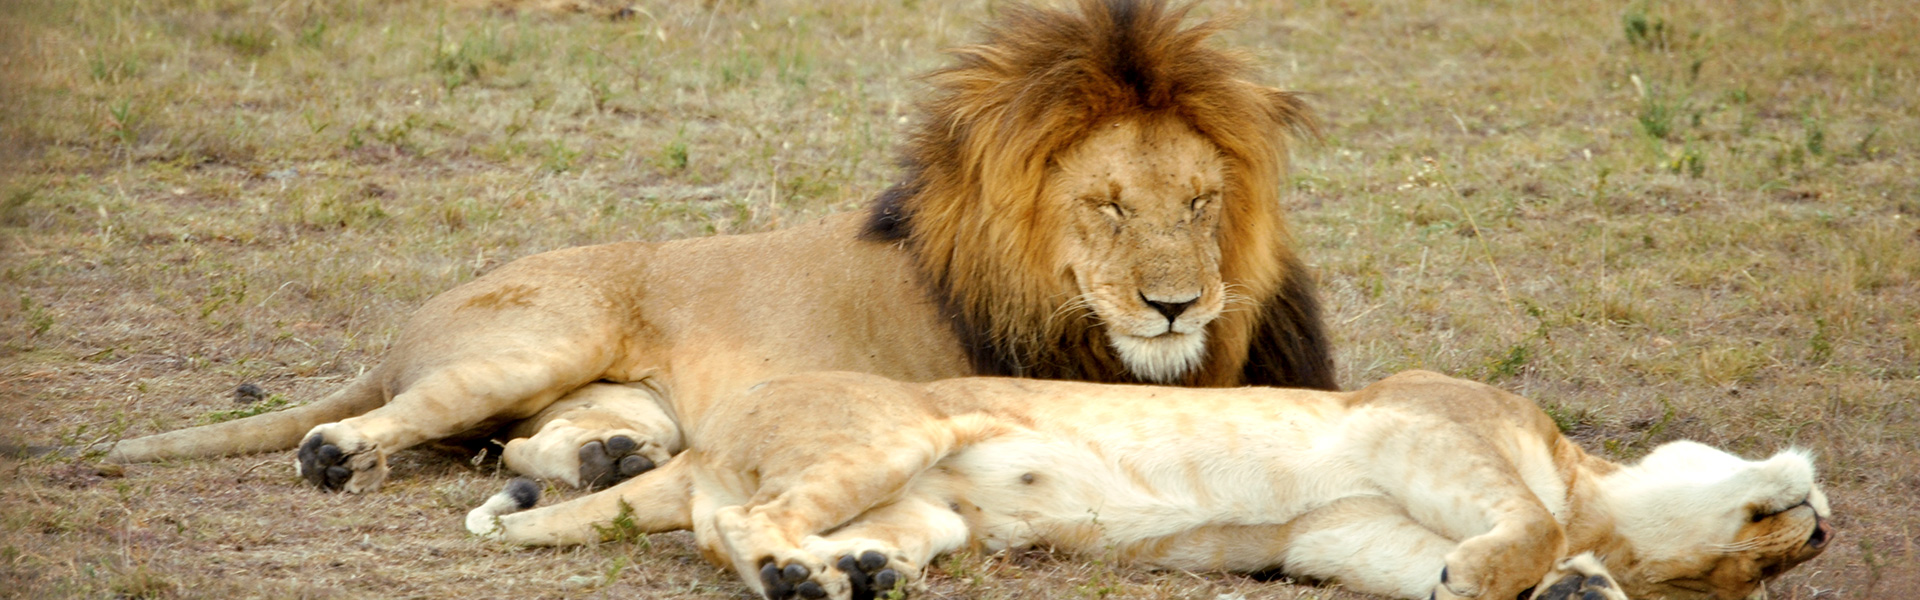 2014-kenya-masai-mara-naboisho-lions--photo-anne-k-simonsen